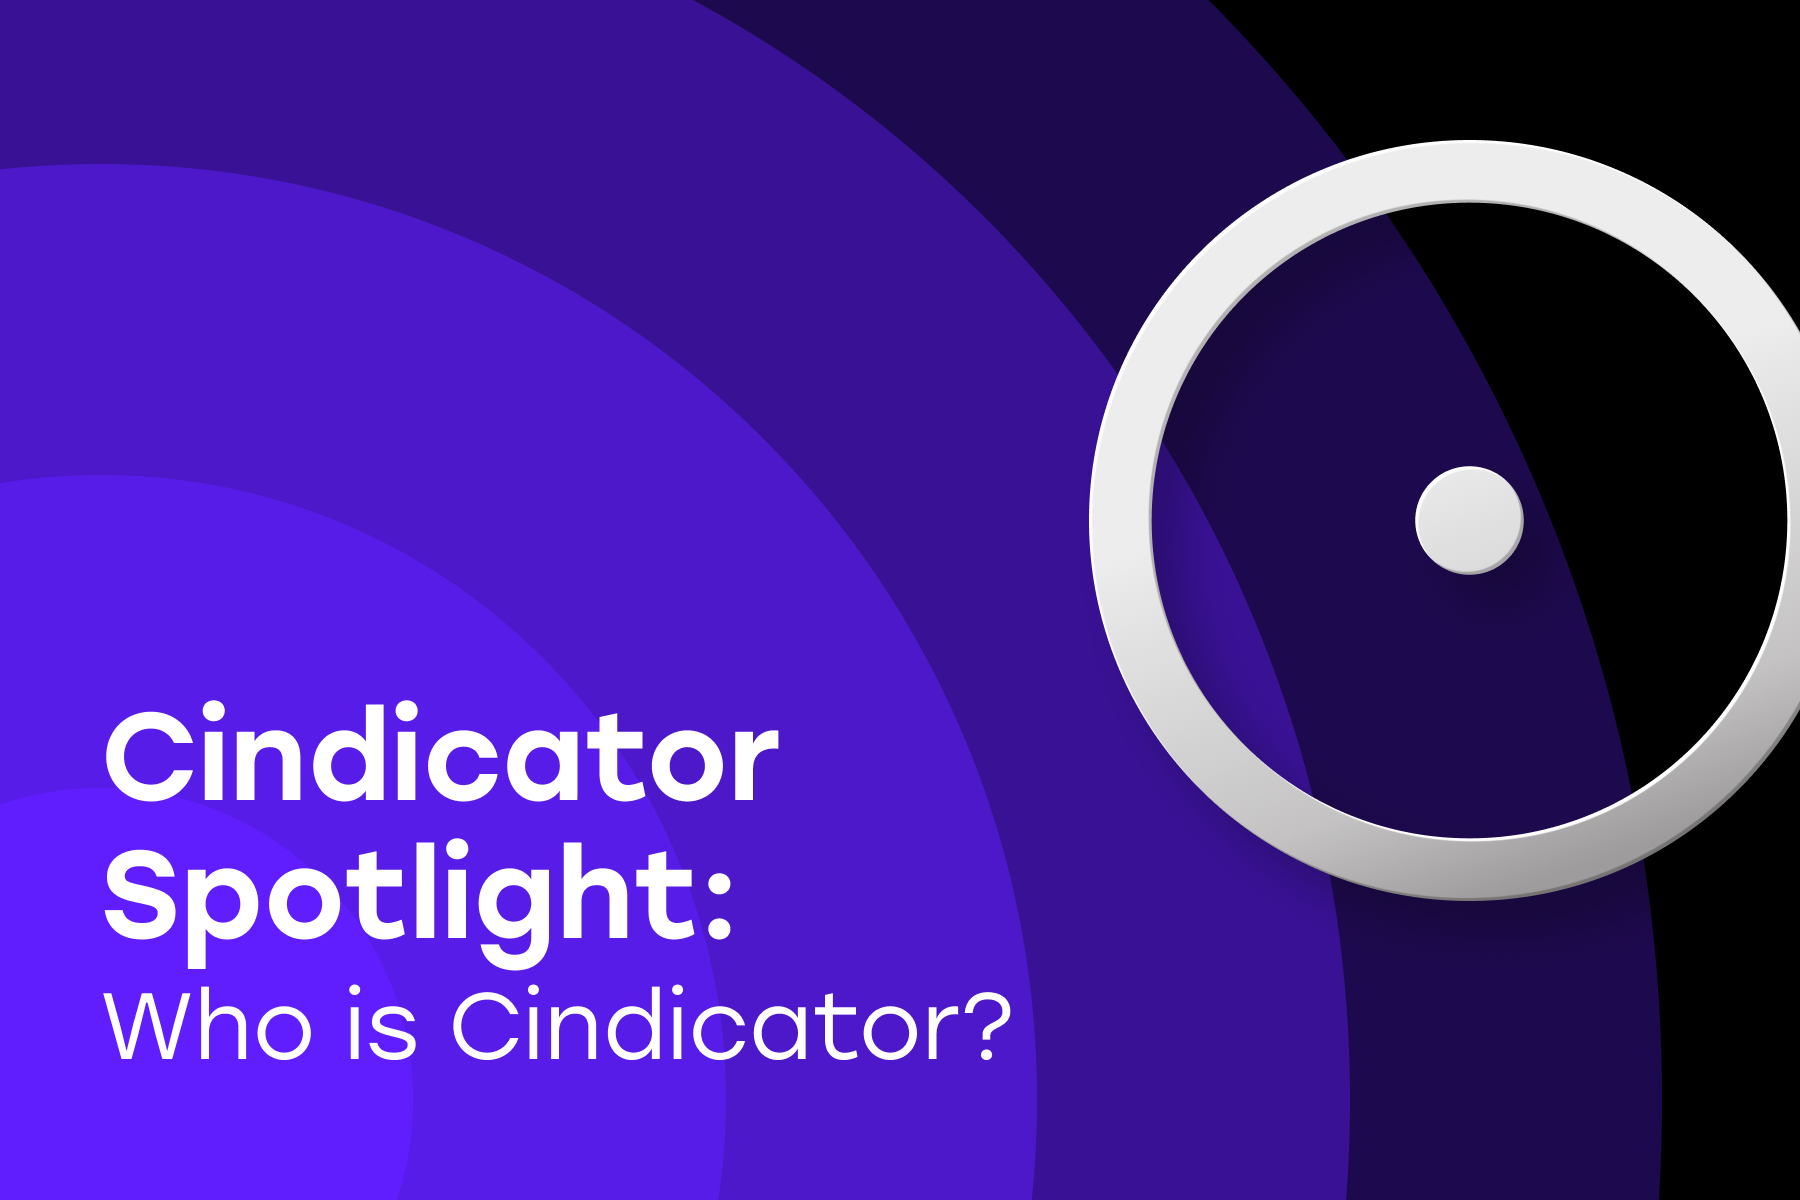 Cindicator Spotlight: Who is Cindicator?